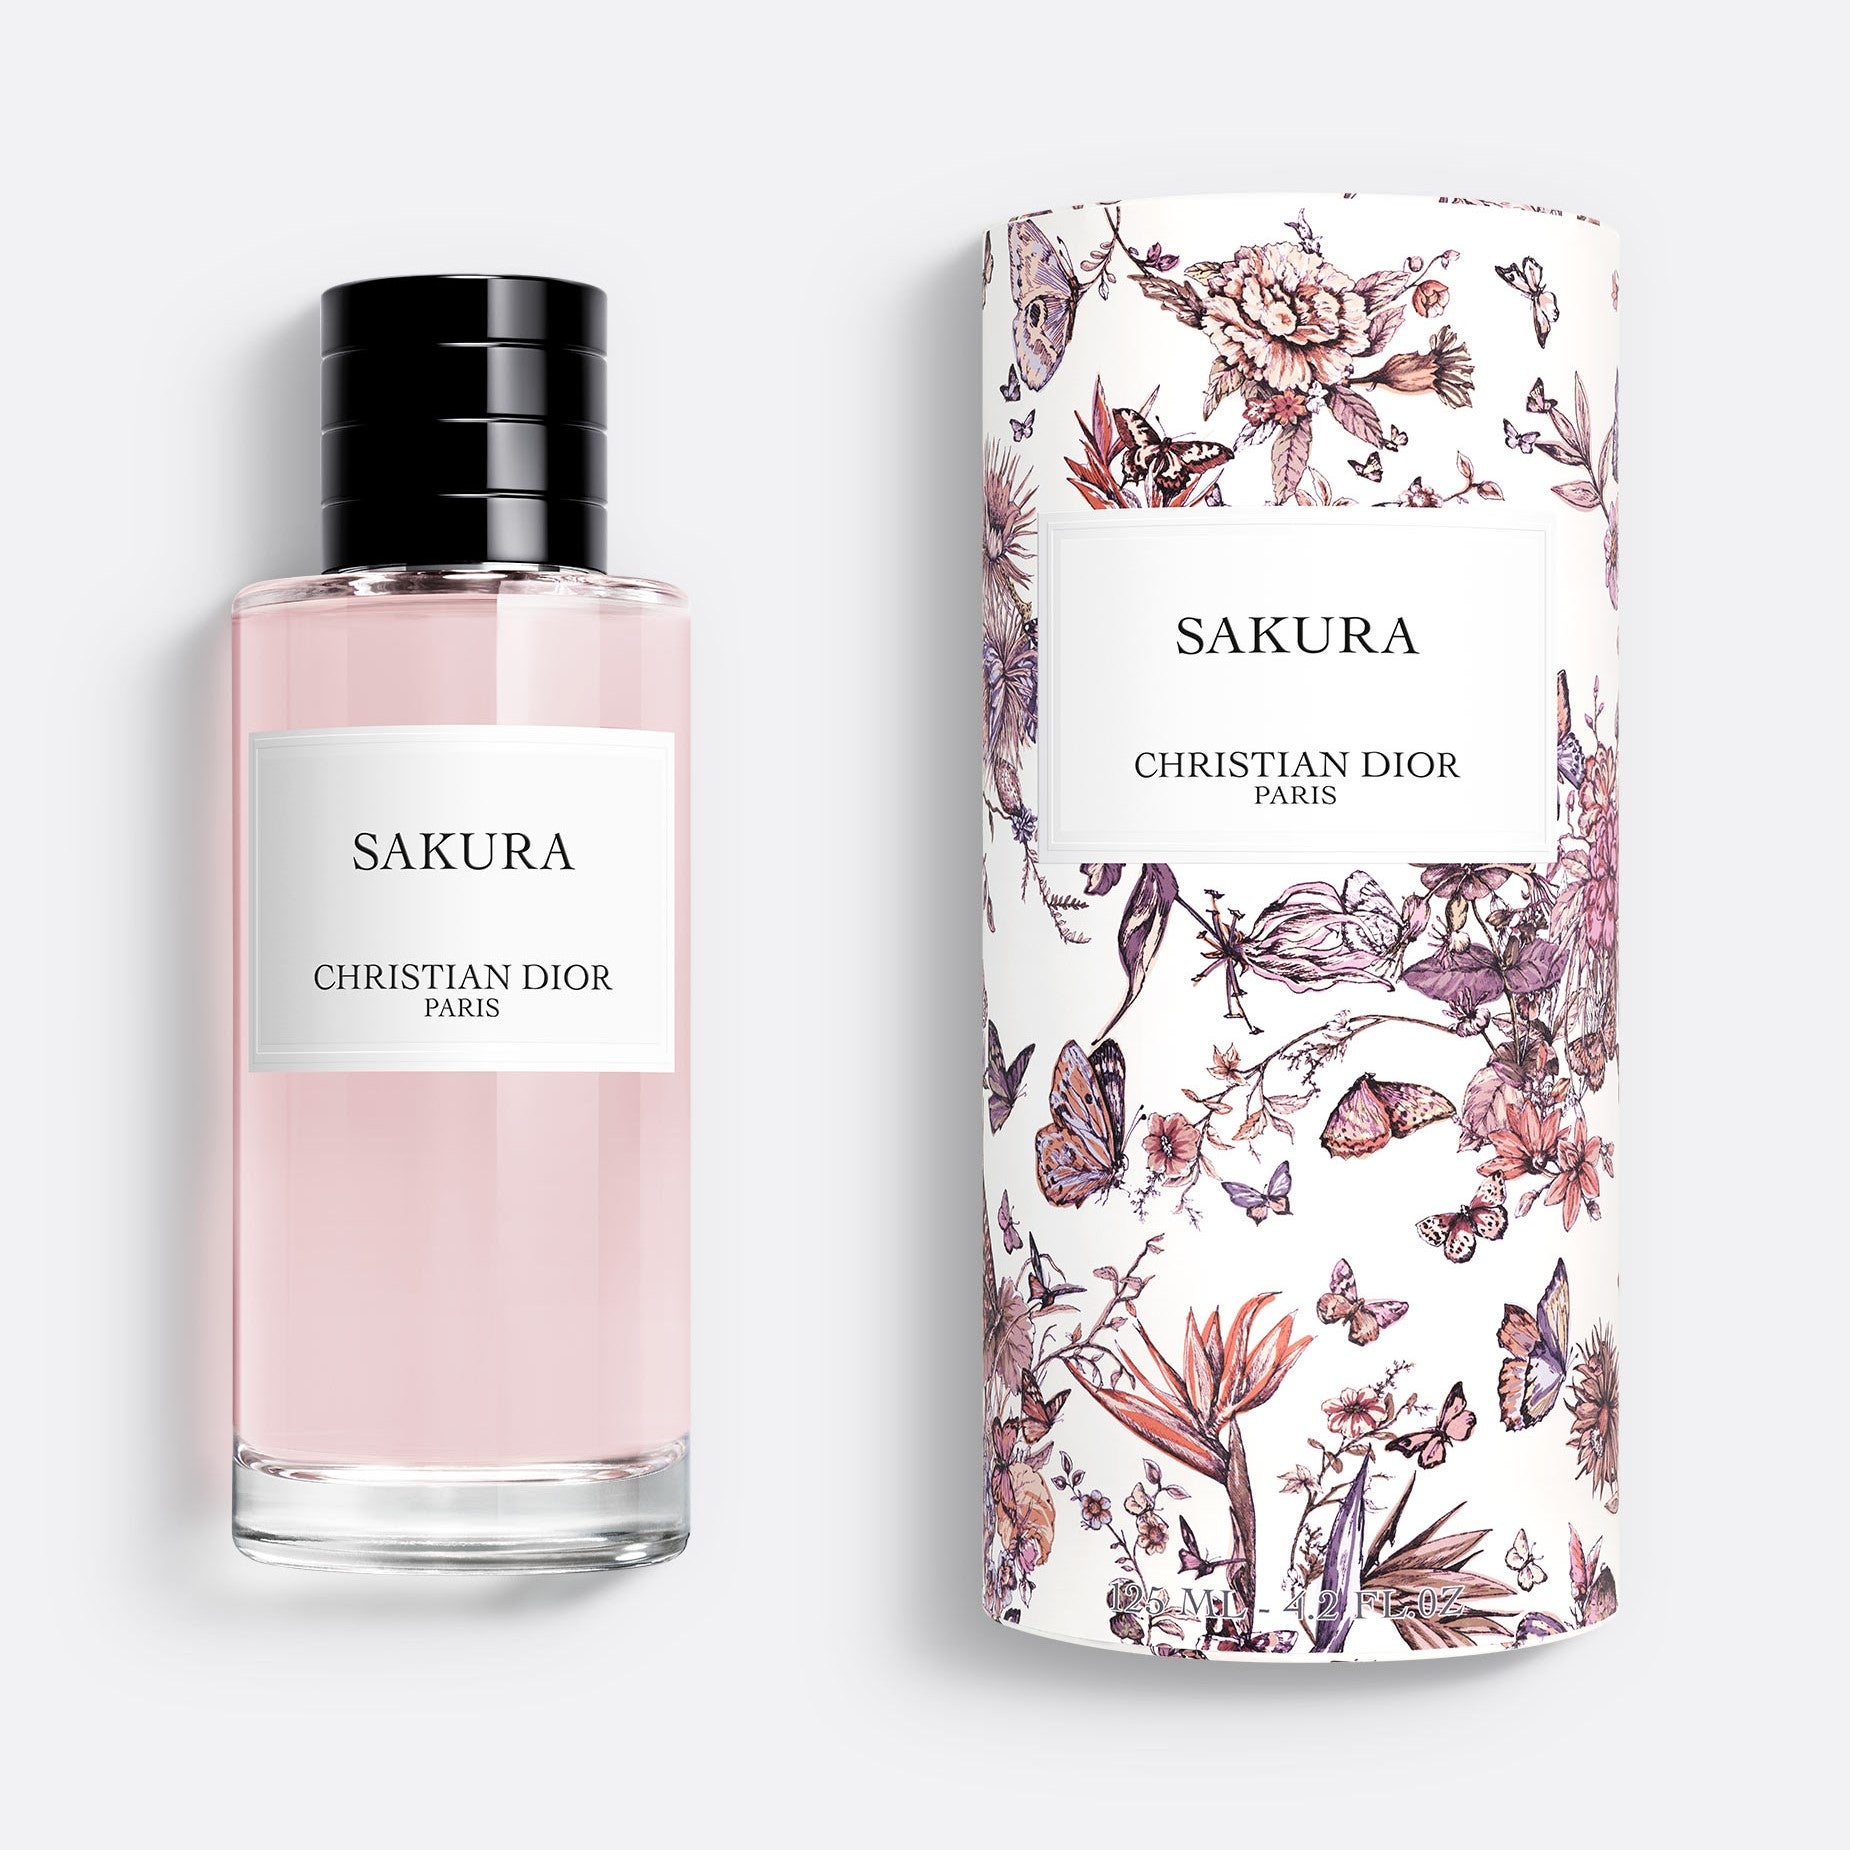 SAKURA – LIMITED EDITION | Unisex Eau de Parfum – Floral and Musky Notes – Case with Botanical Motif